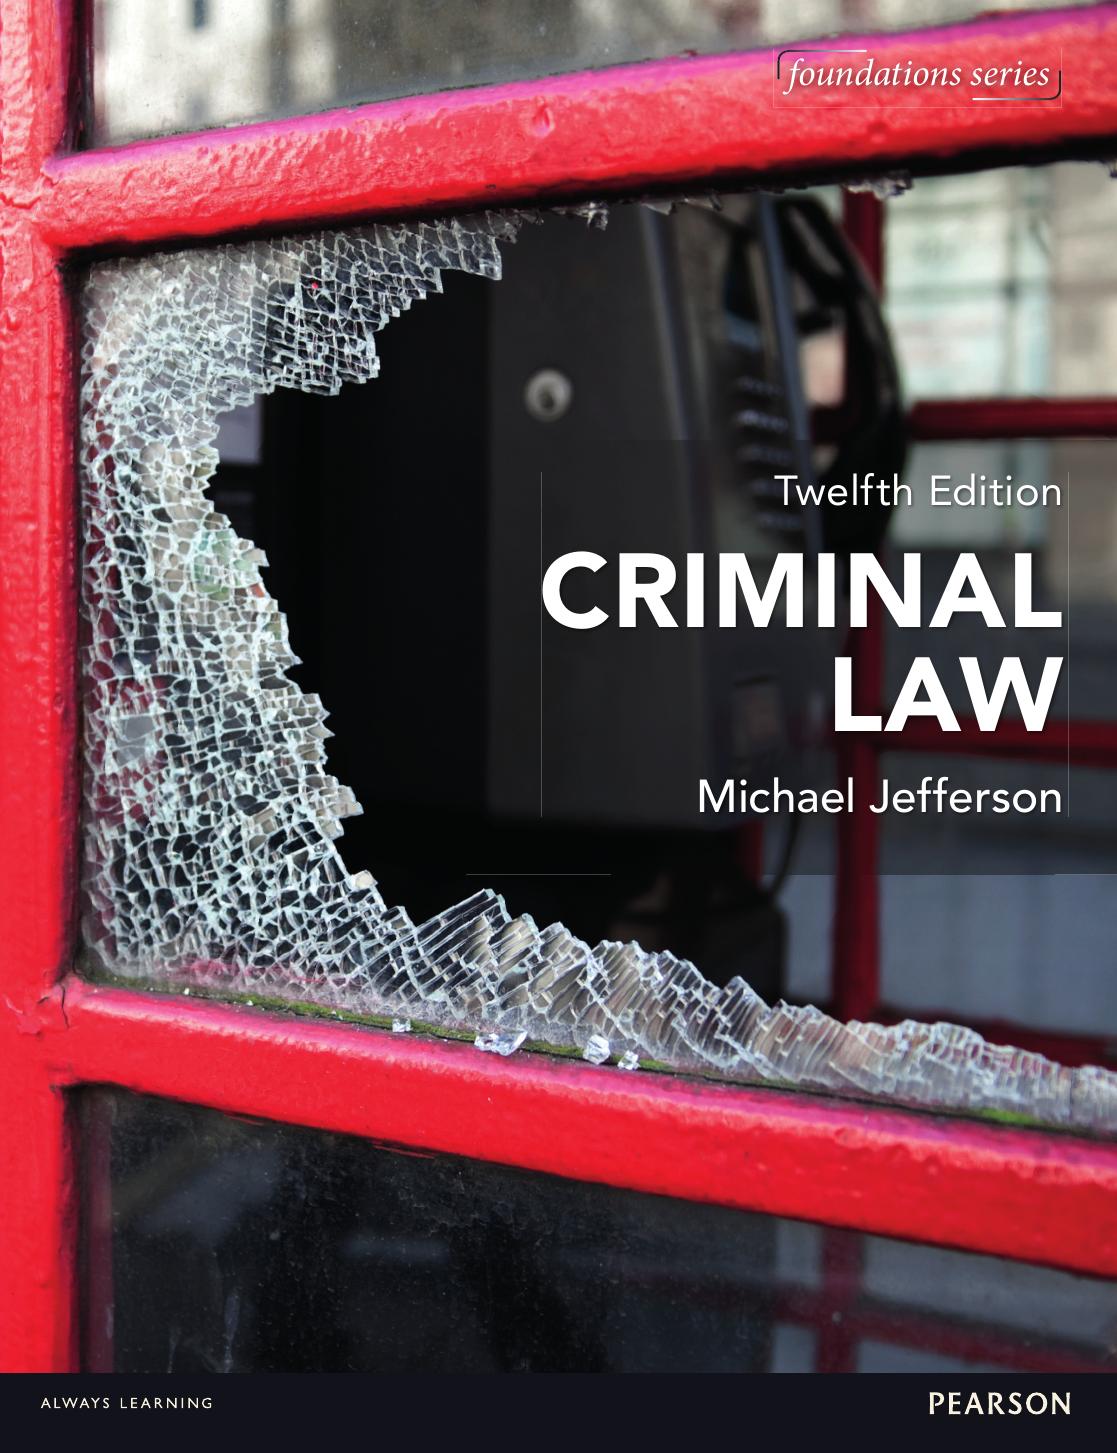 Criminal Law 12th - MICHAEL JEFFERSON.jpg